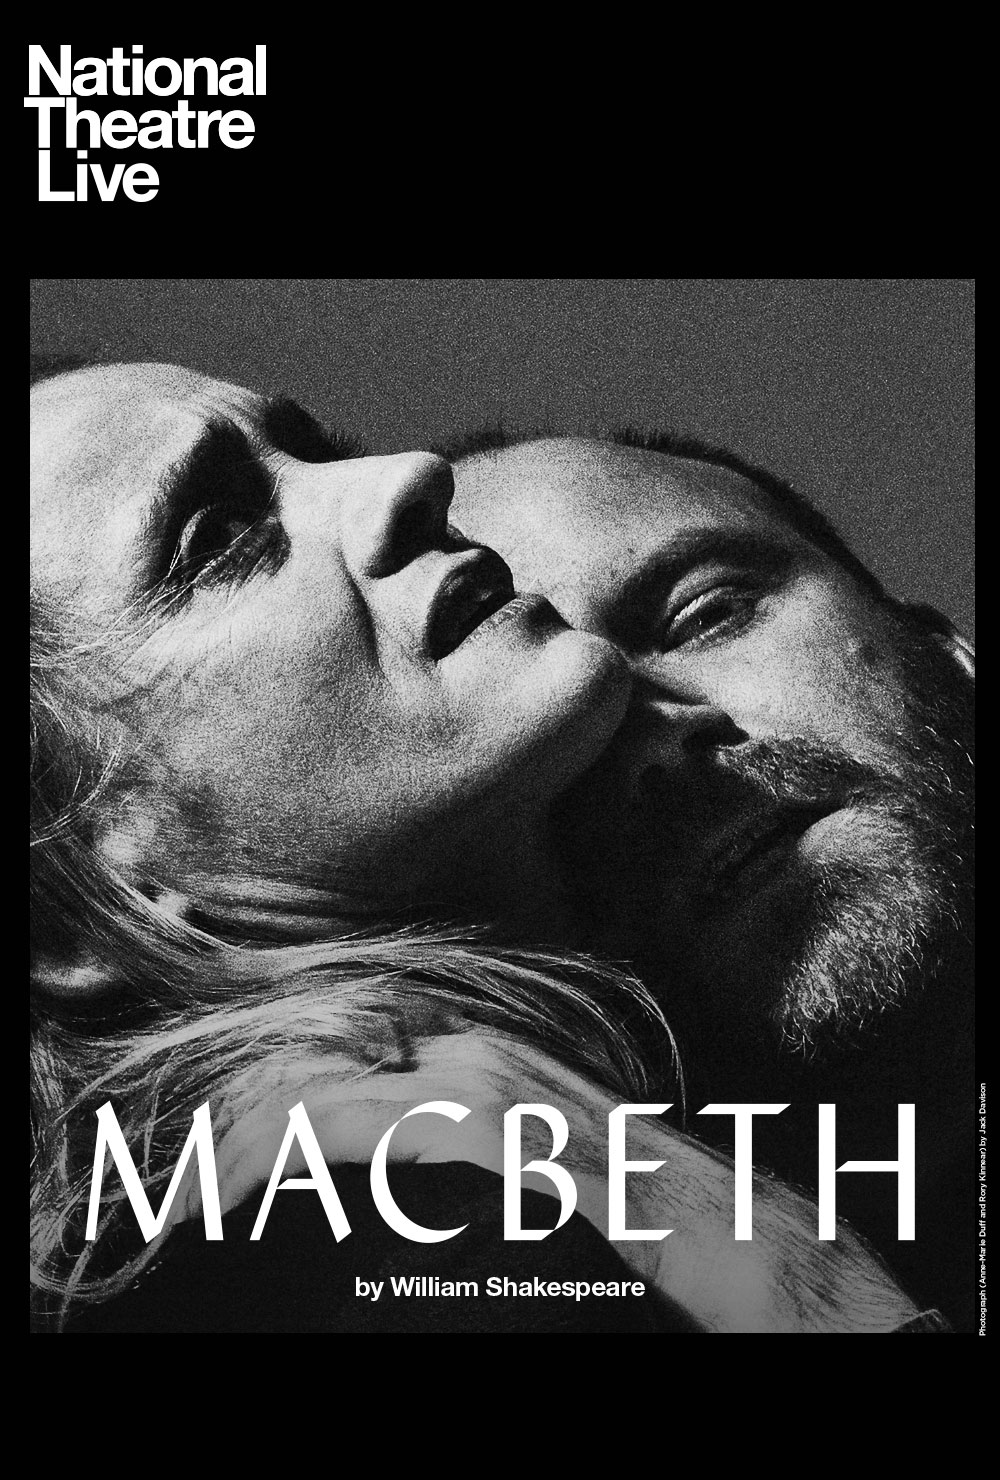 روری کینیار در صحنه فیلم سینمایی National Theatre Live: Macbeth به همراه Anne-Marie Duff